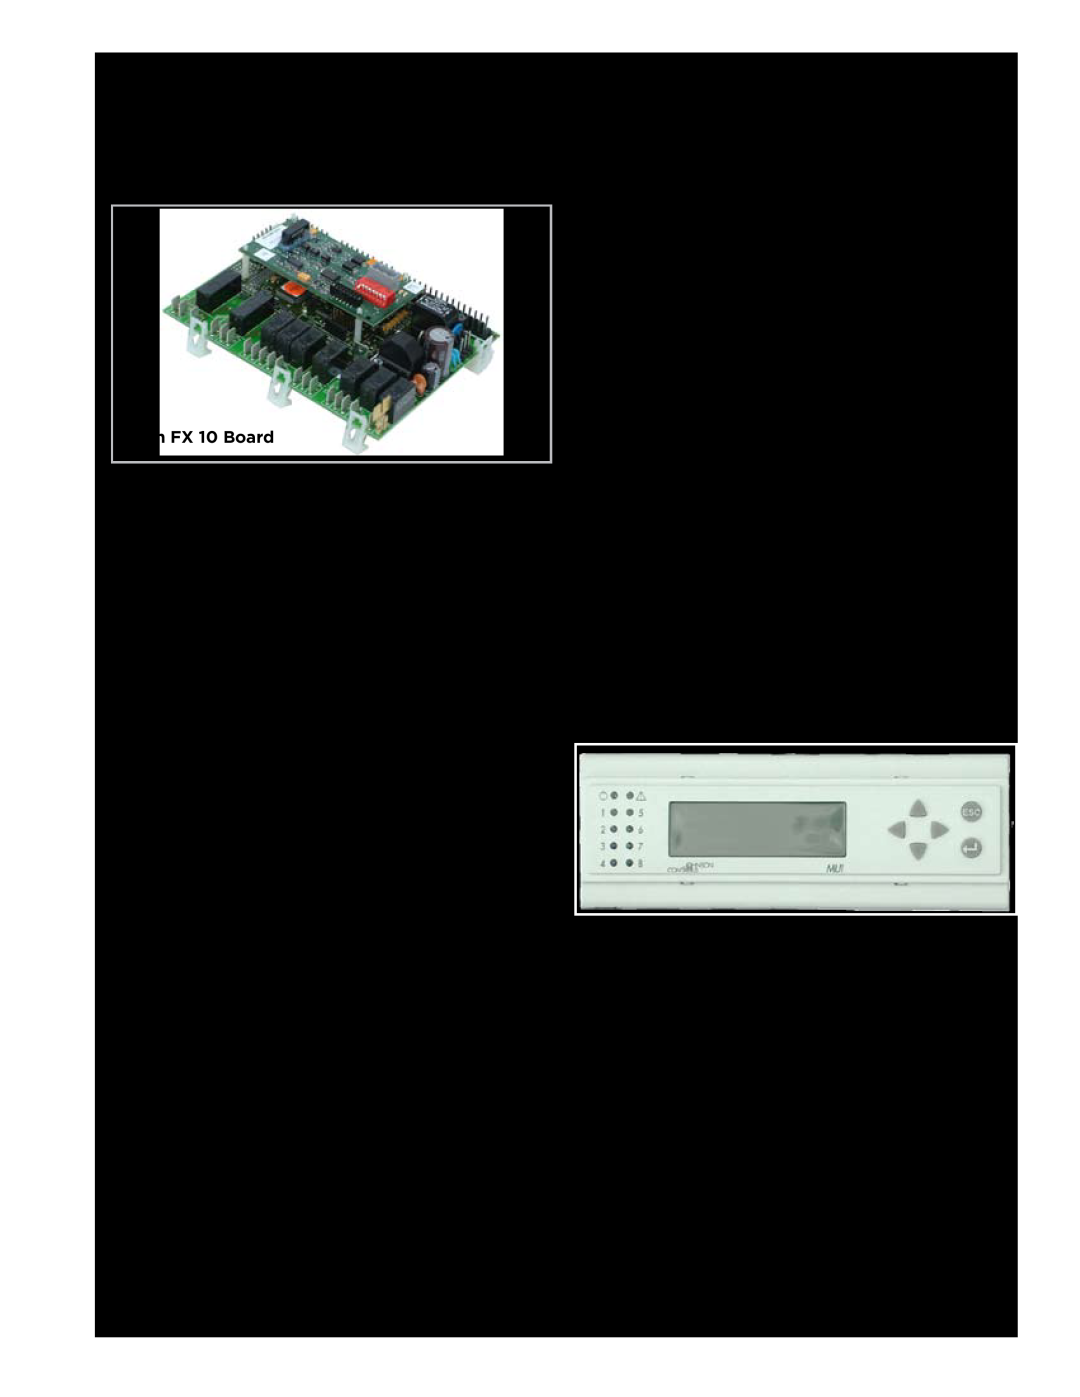 Envision Peripherals IM1609 10 Optional FX10 Control, Random Start, Main FX 10 Board, FX10 Advanced Control Overview 